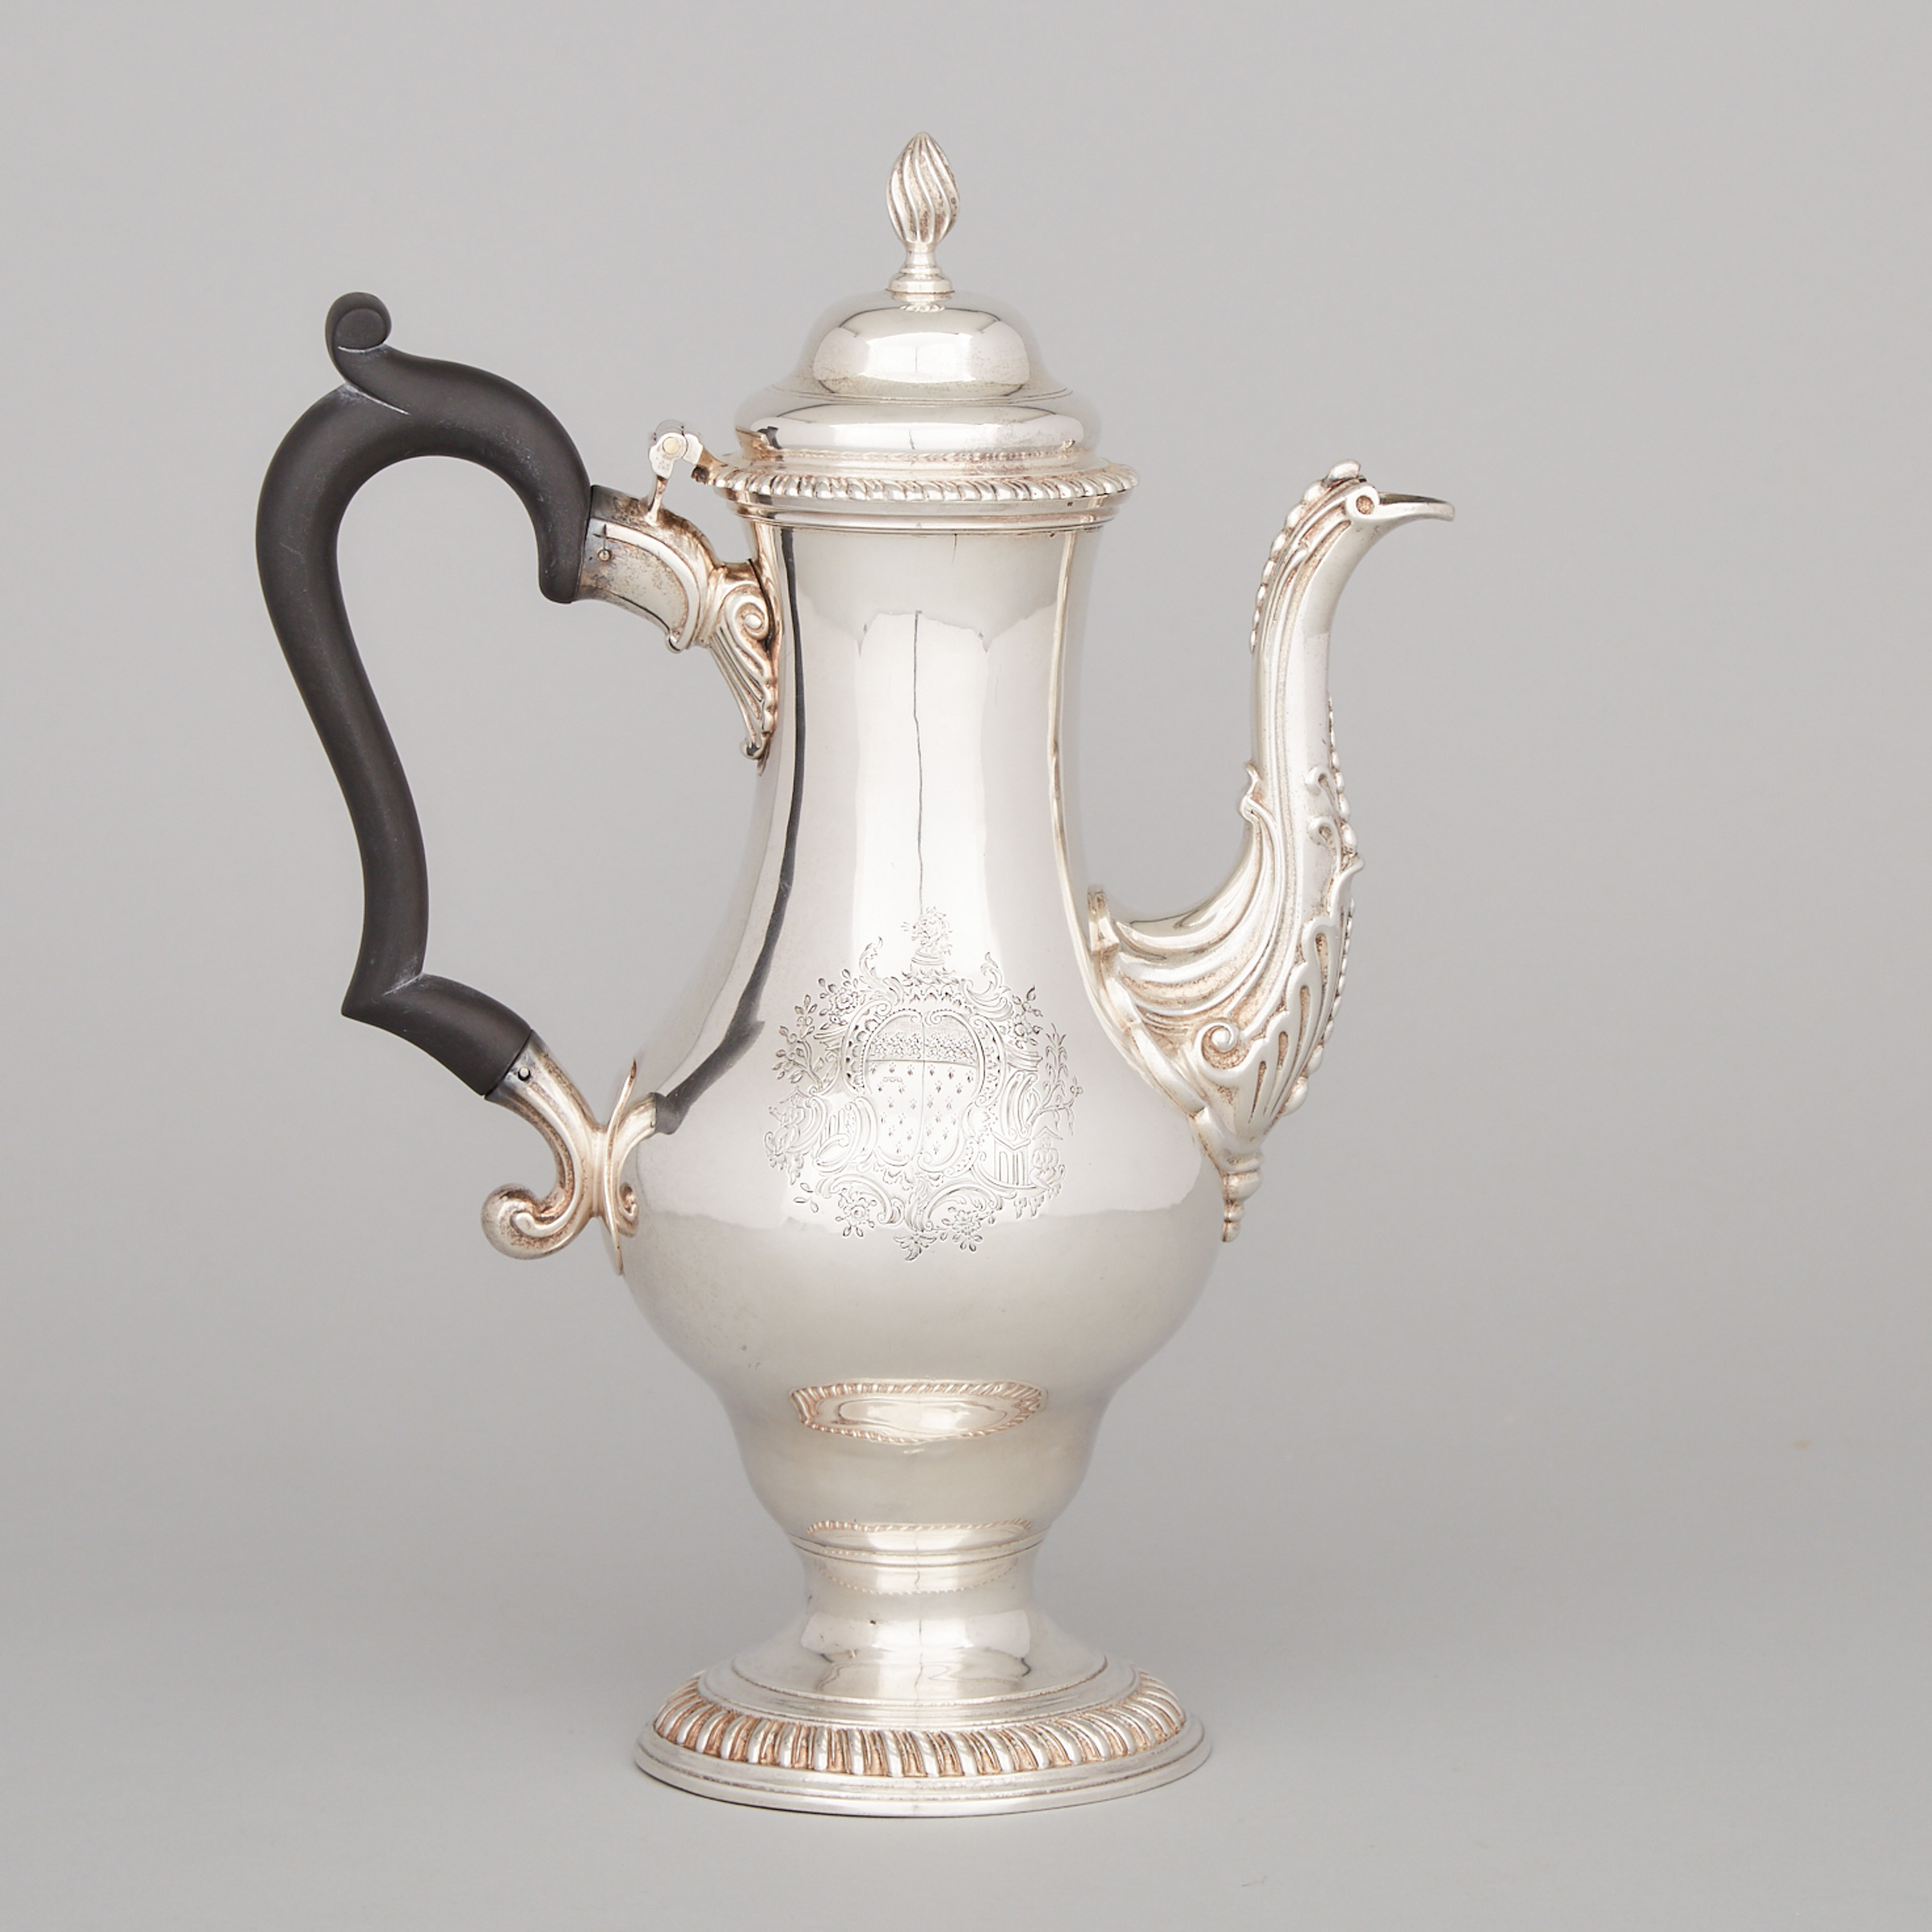 George III Silver Coffee Pot, William Grundy, London, 1772